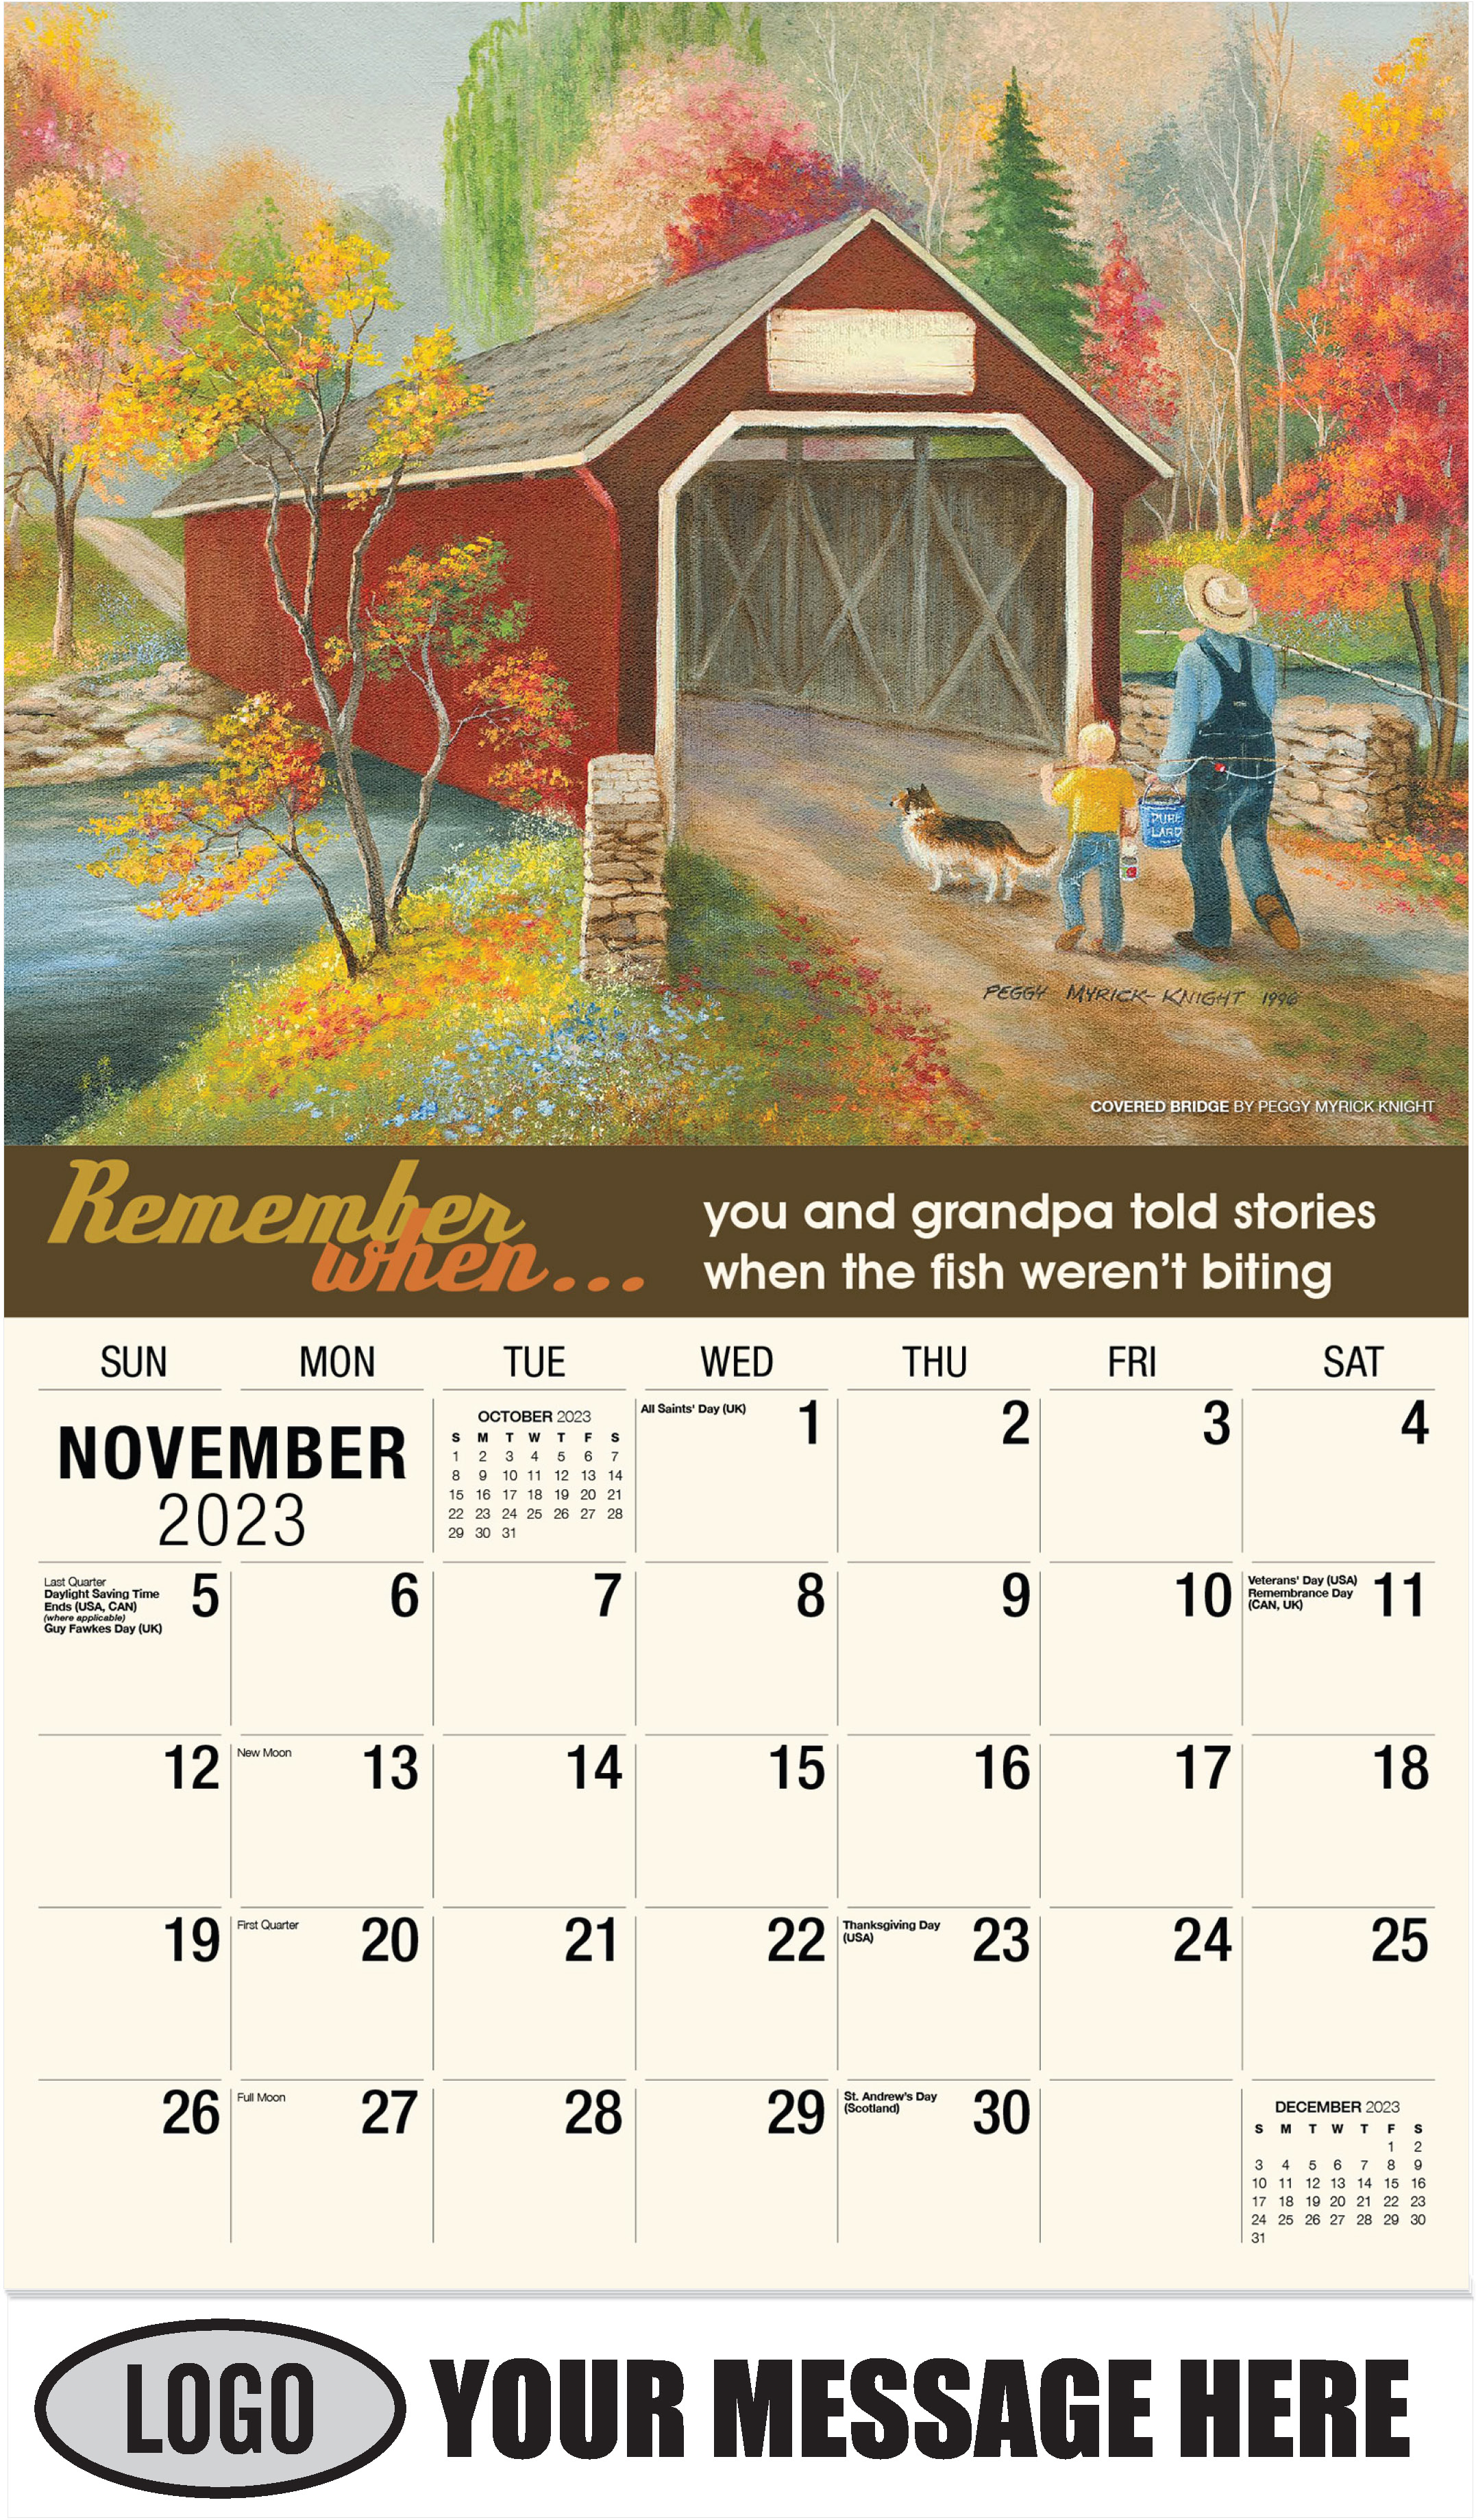 Covered Bridge by Peggy Myrick Knight - November - Remember When 2023 Promotional Calendar